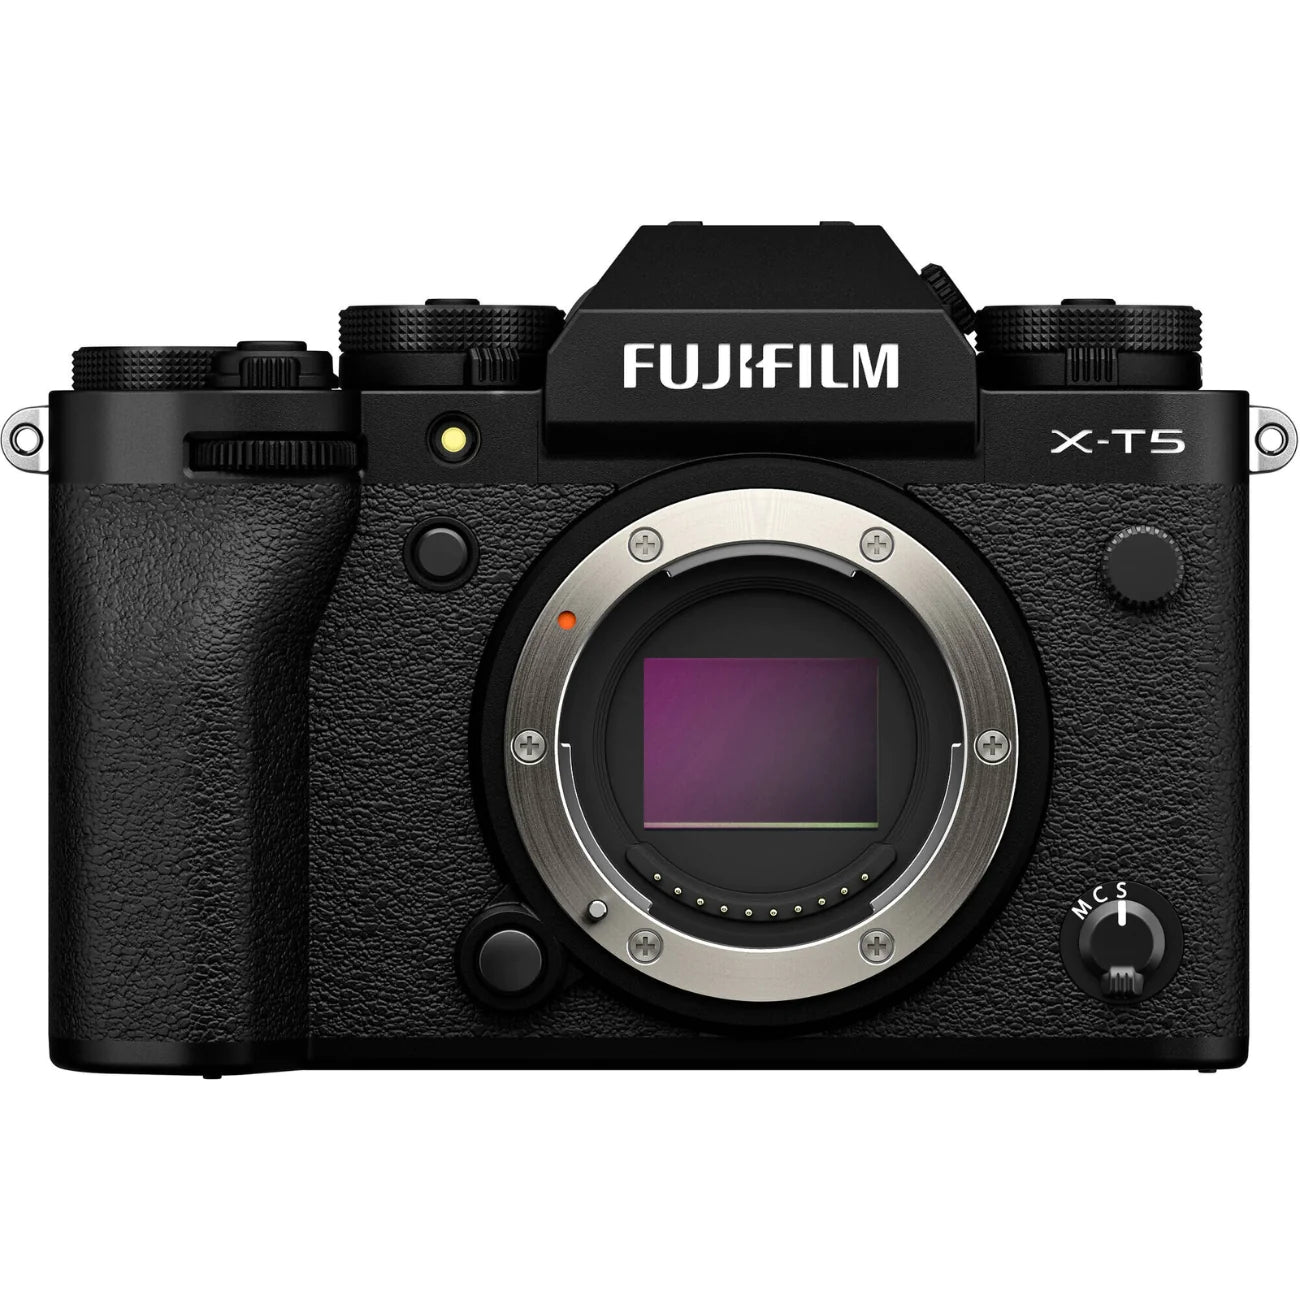 Fujifilm X-T5 Mirrorless Digital Camera: A Comprehensive Review